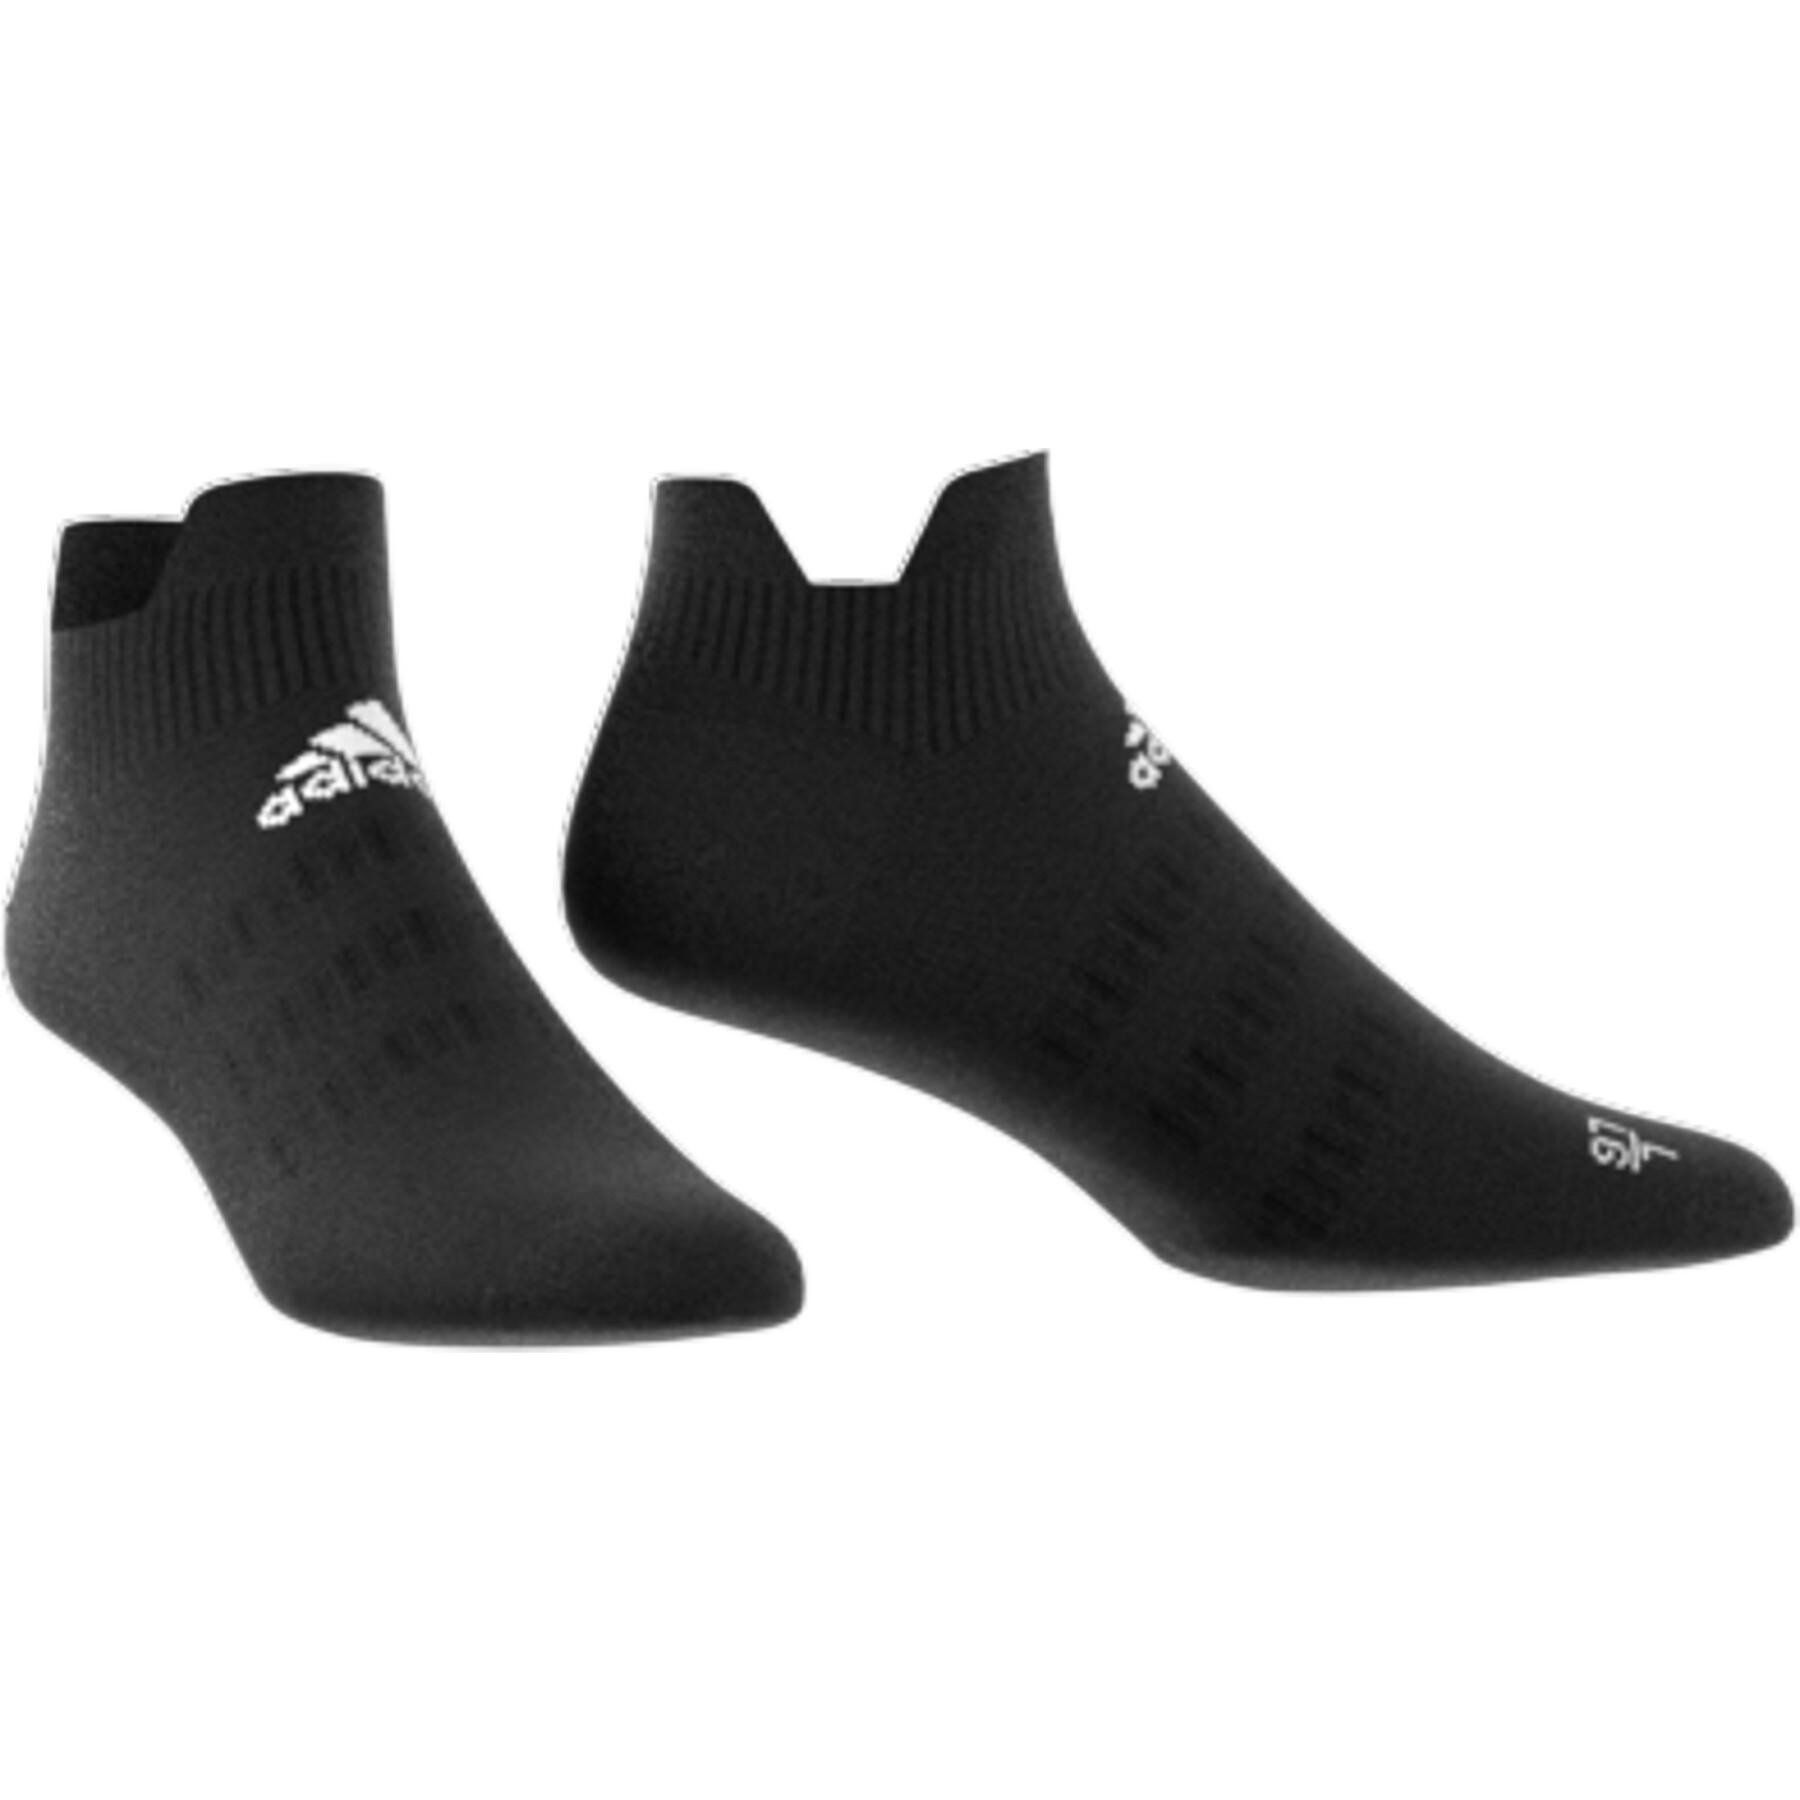 Socks adidas Alphaskin